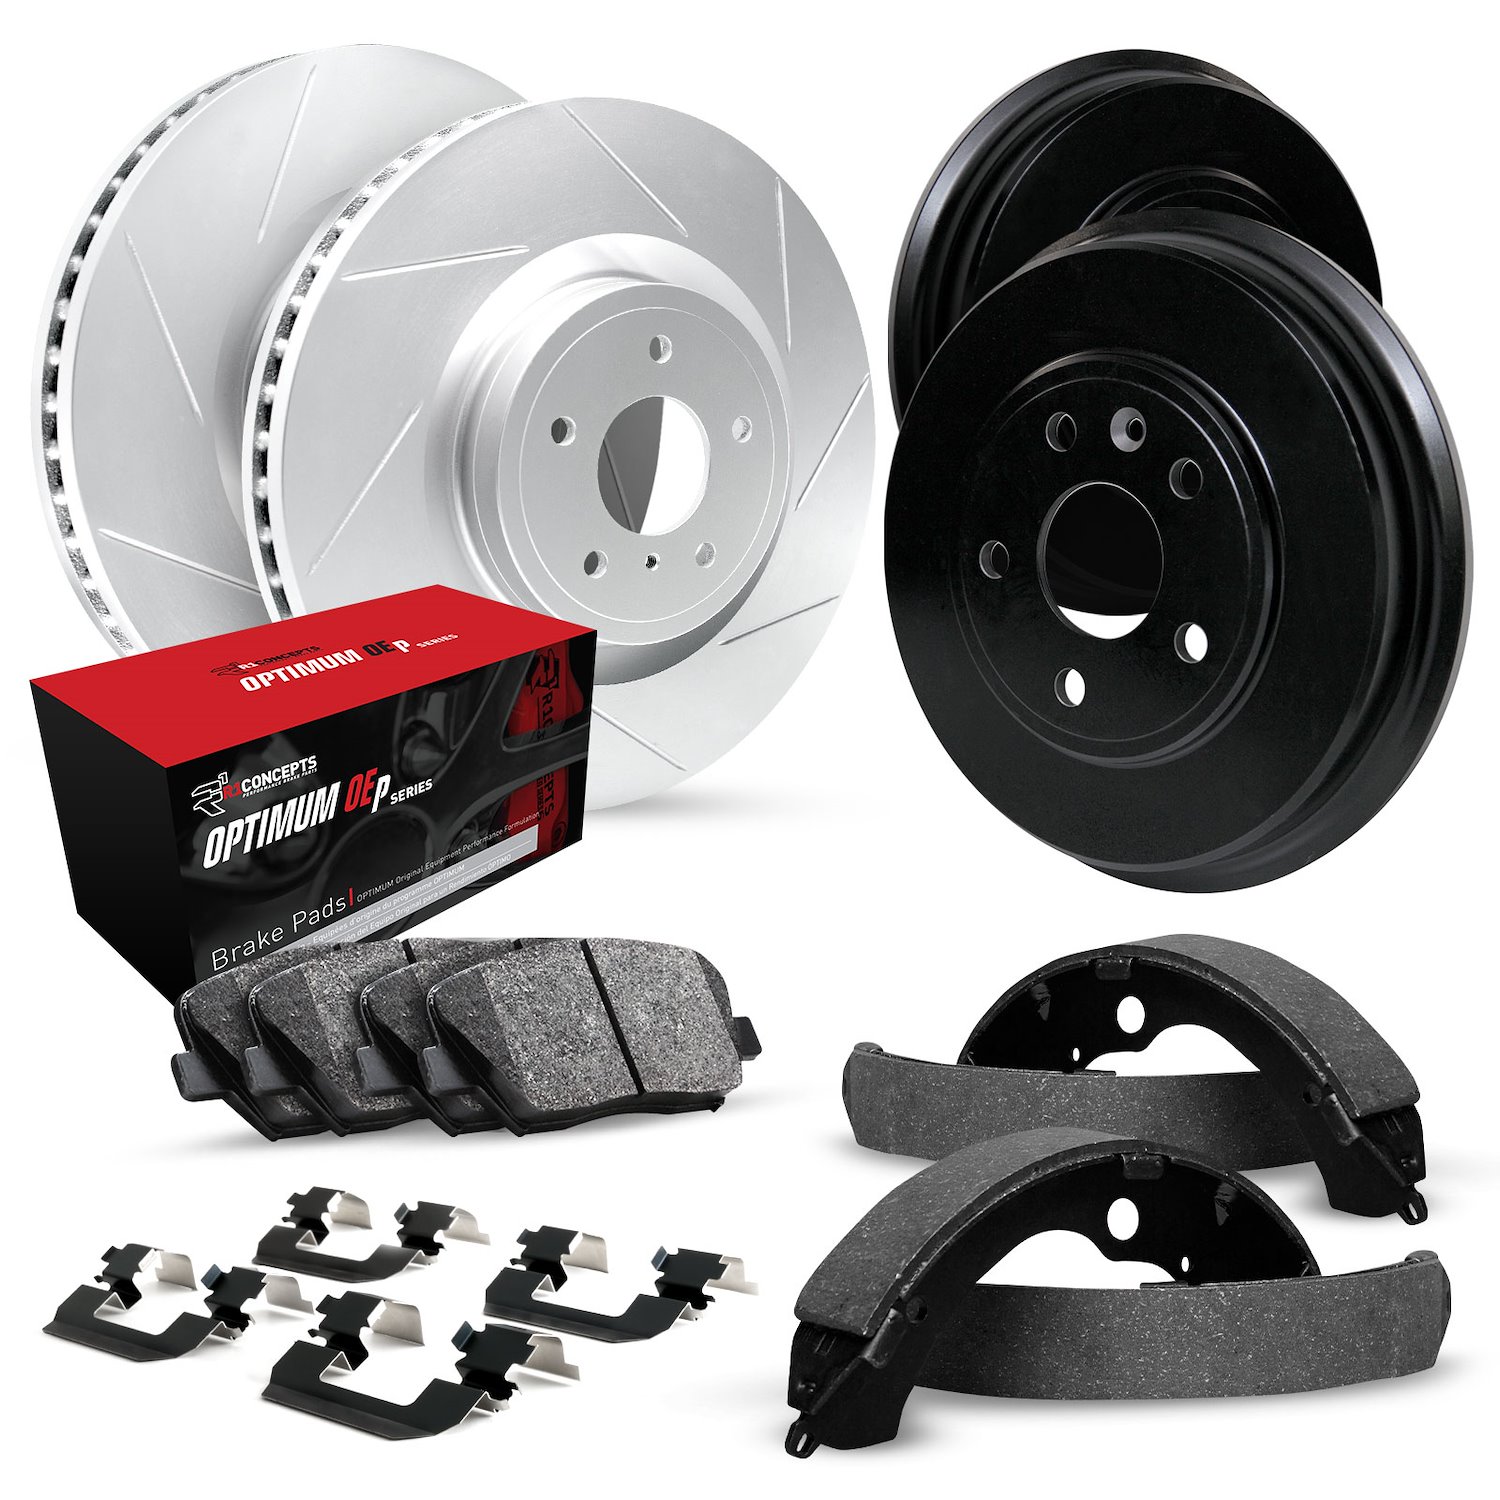 GEO-Carbon Slotted Brake Rotor & Drum Set w/Optimum OE Pads, Shoes, & Hardware, 2013-2015 Infiniti/Nissan